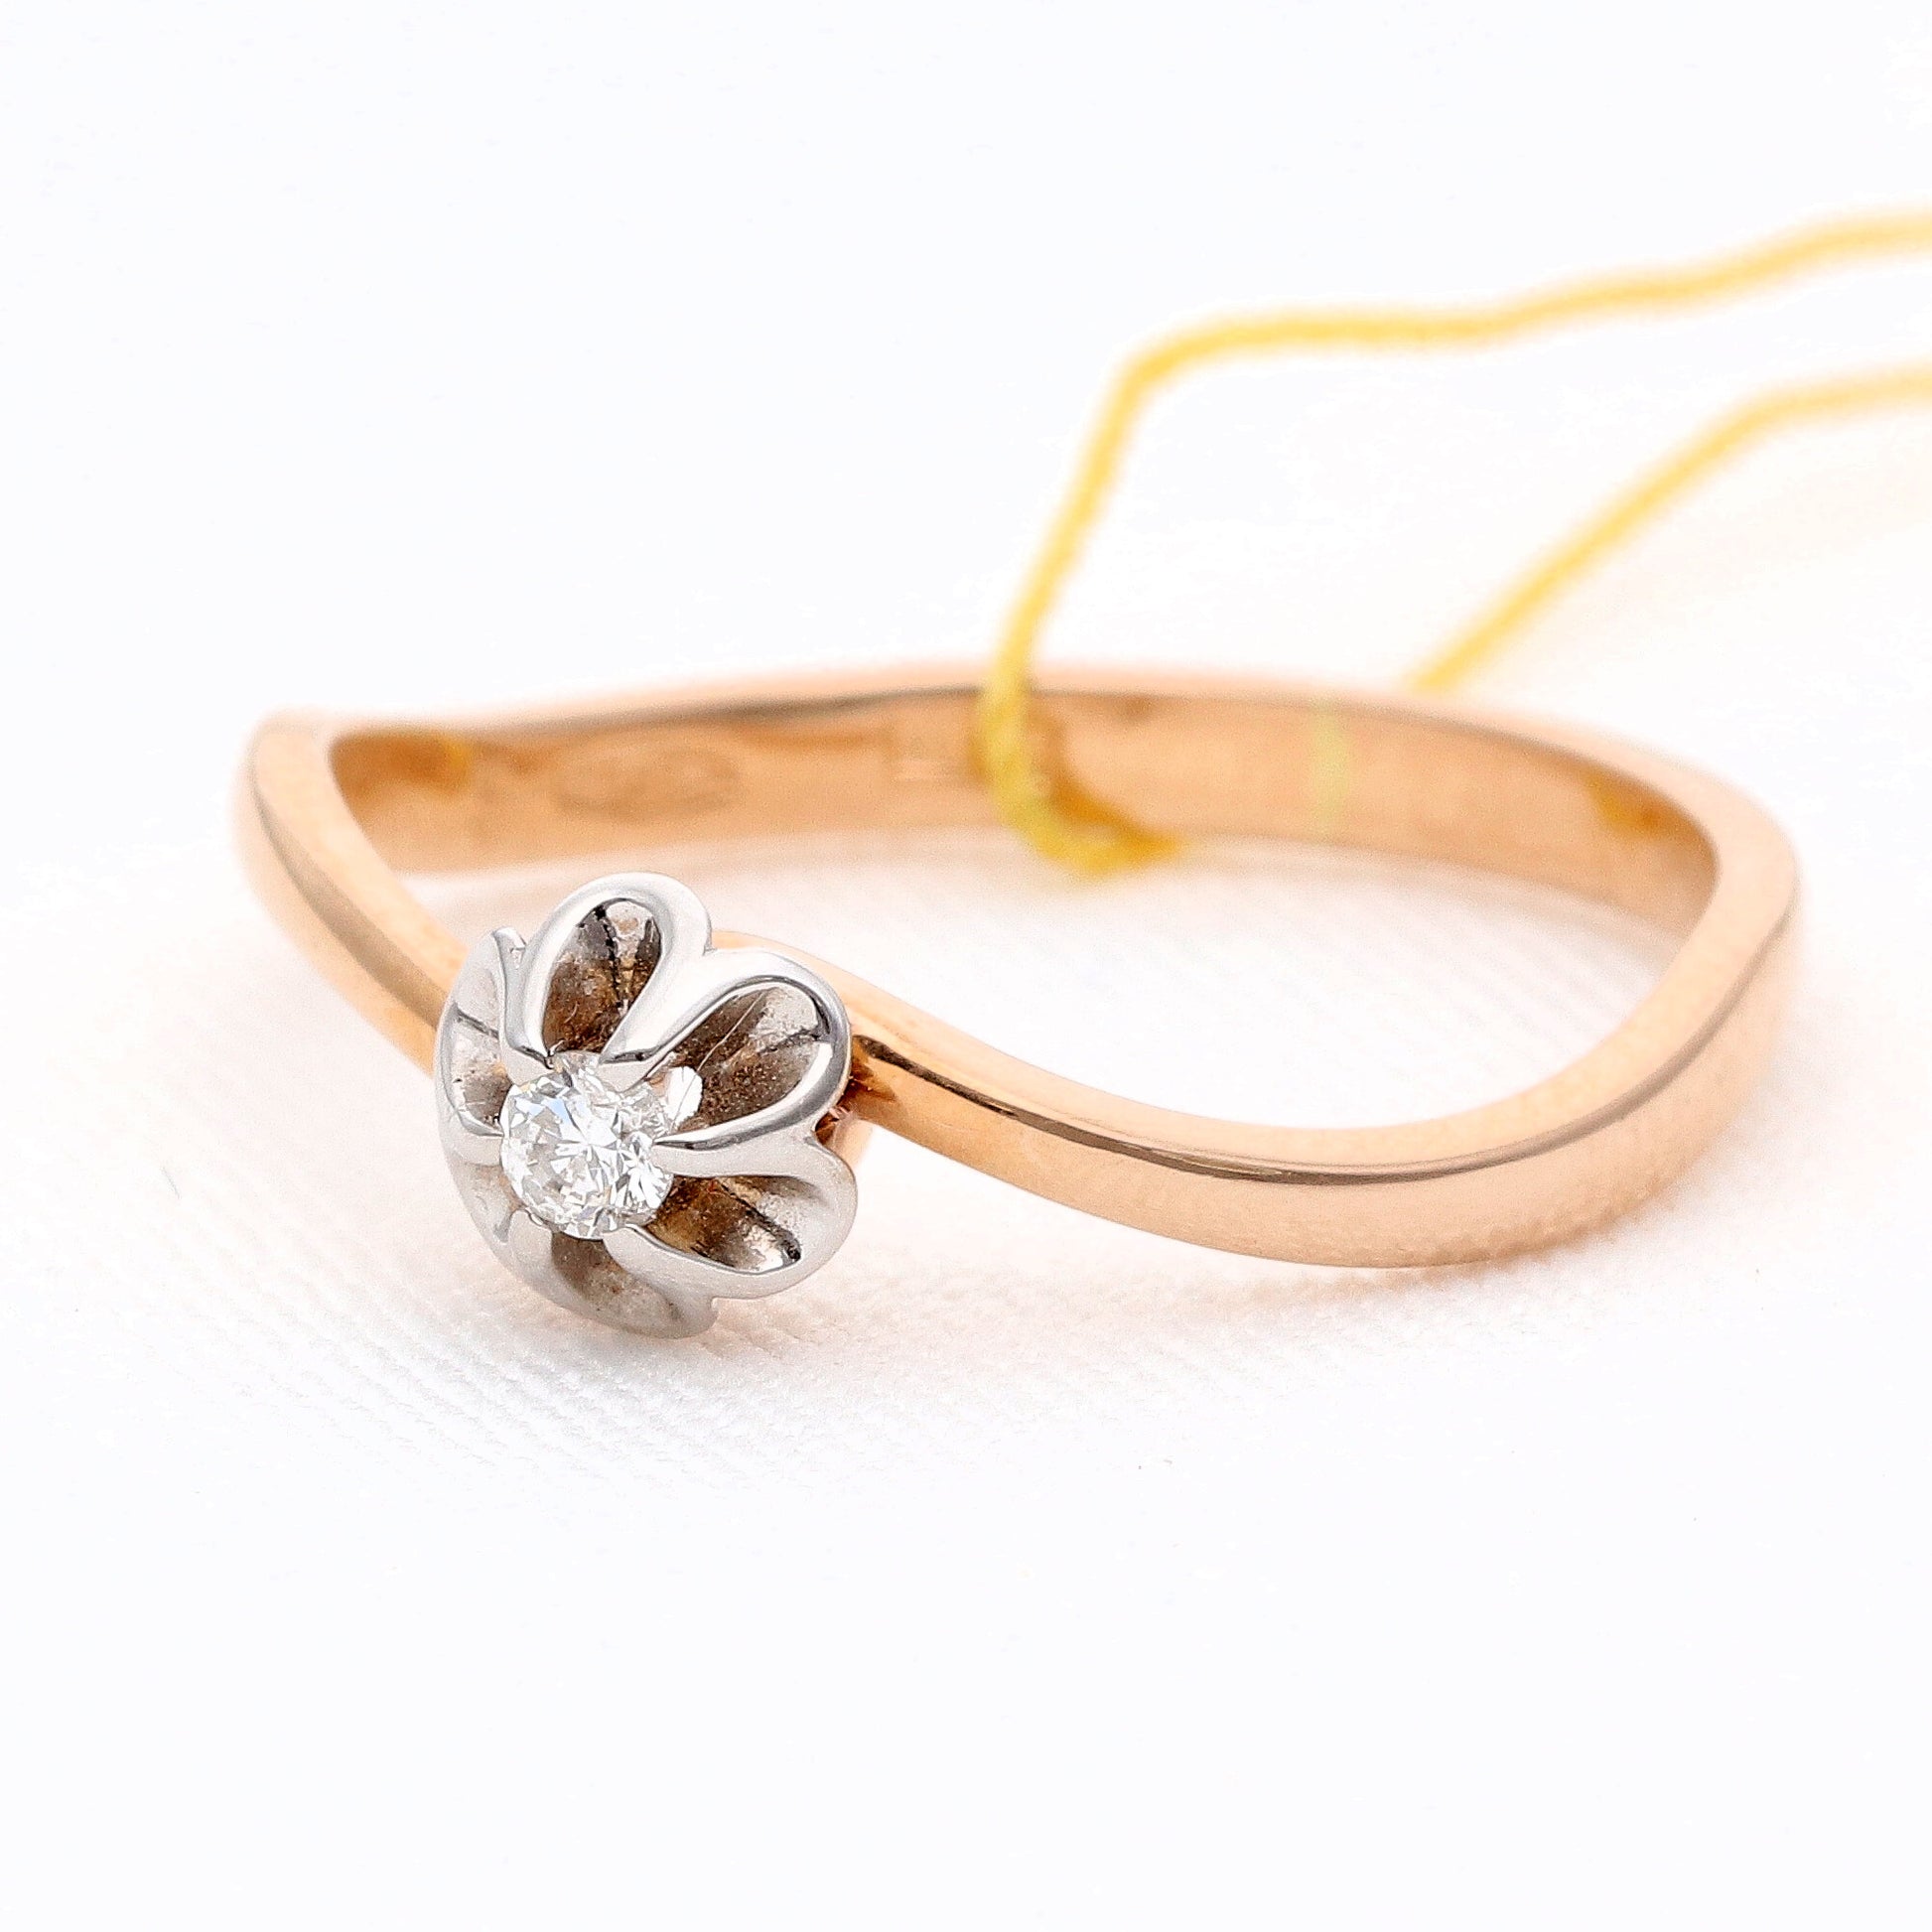 Auksinis žiedas su deimantu 0,044ct vestuviniaiziedai.lt